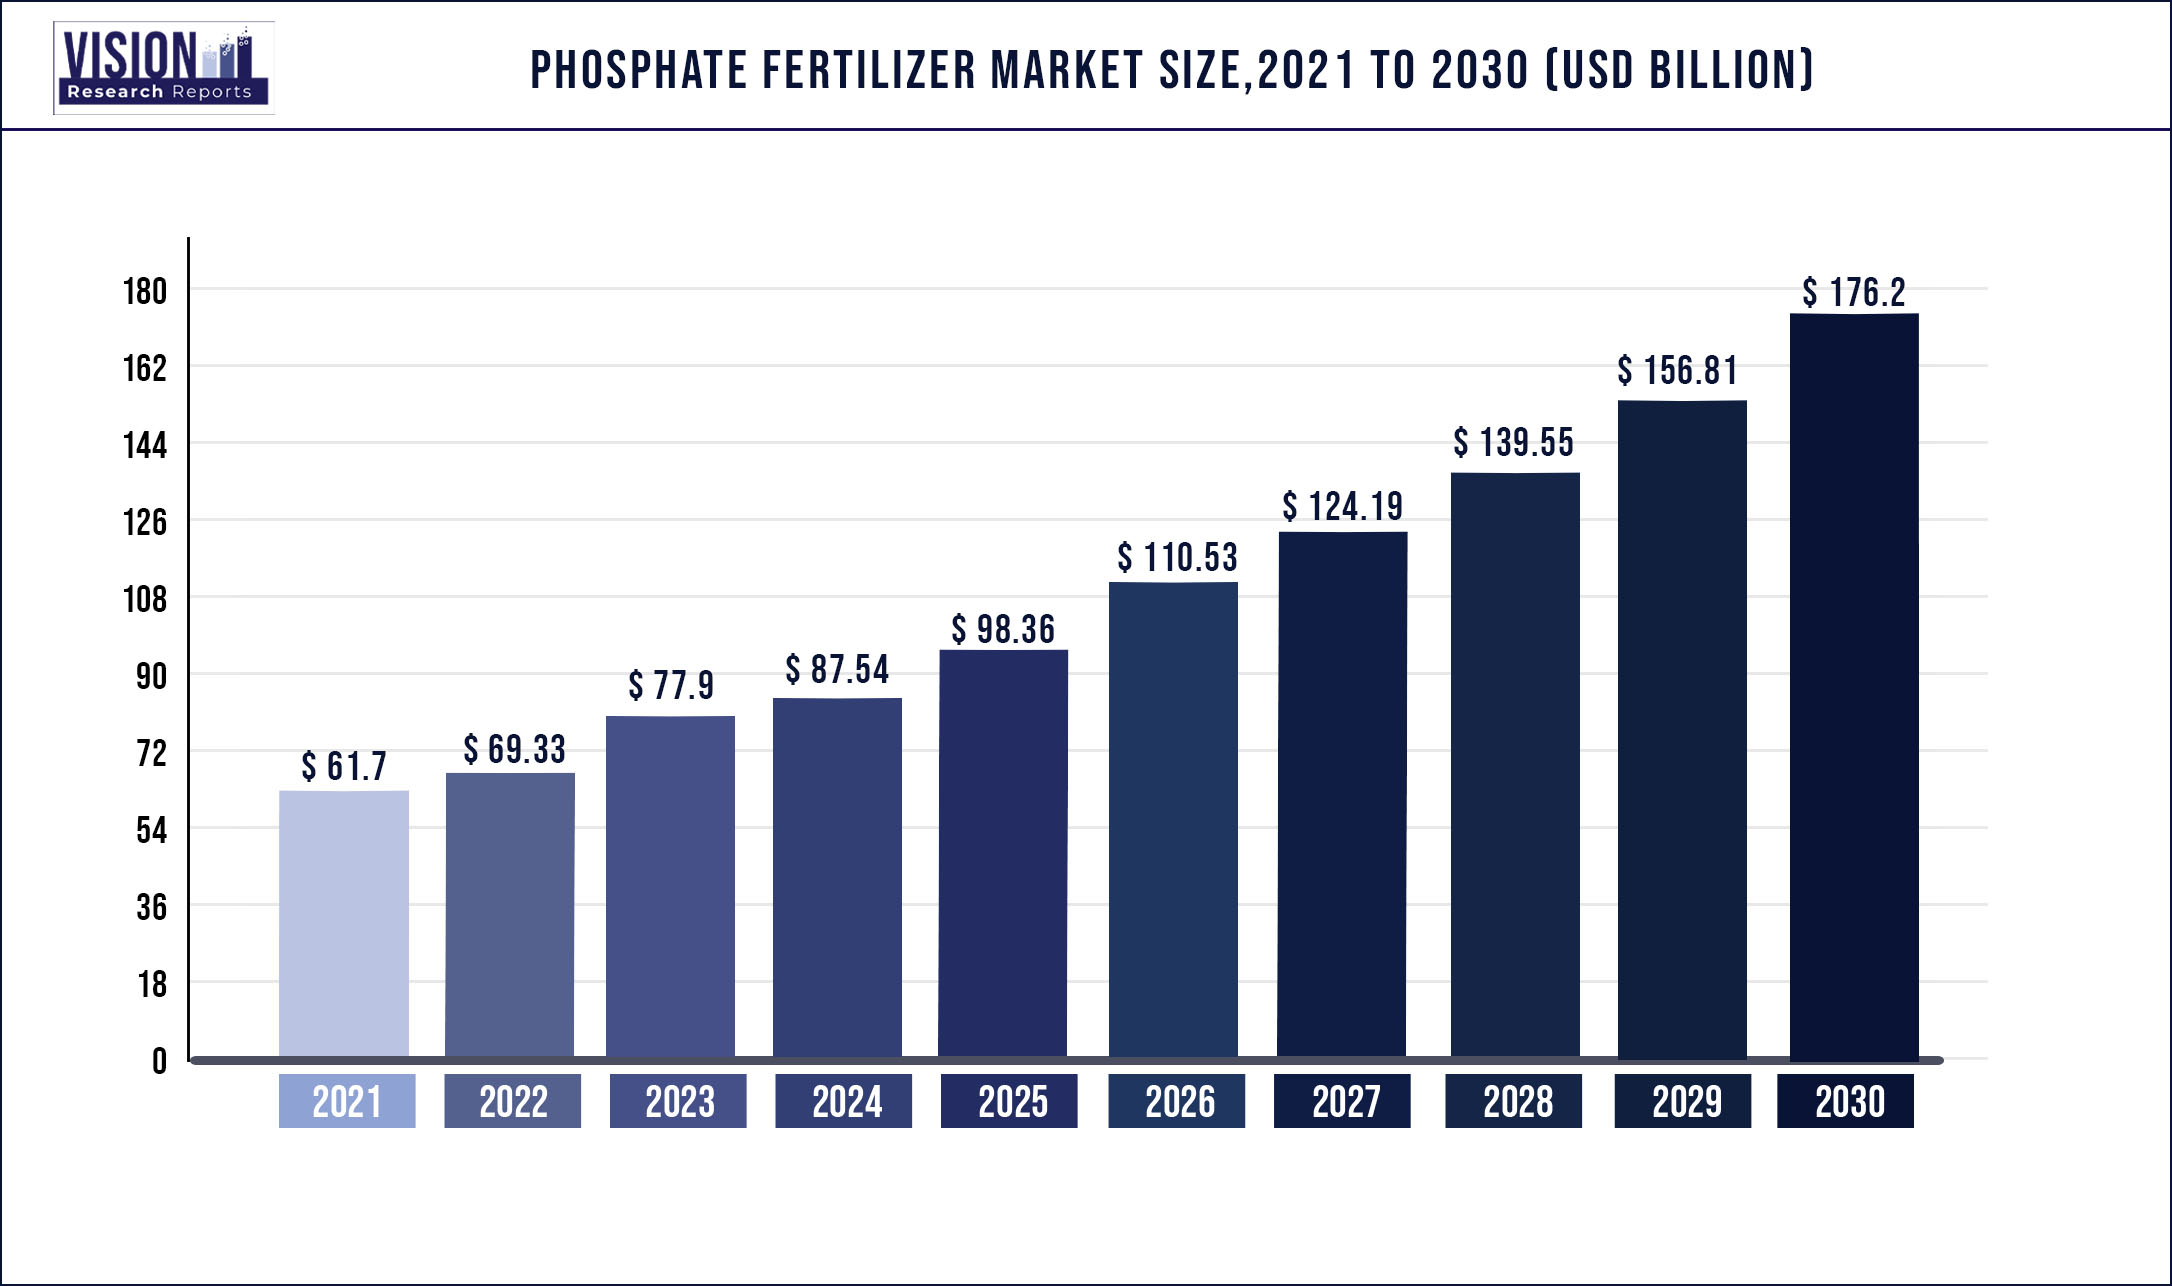 Phosphate Fertilizer Market Size 2021 to 2030